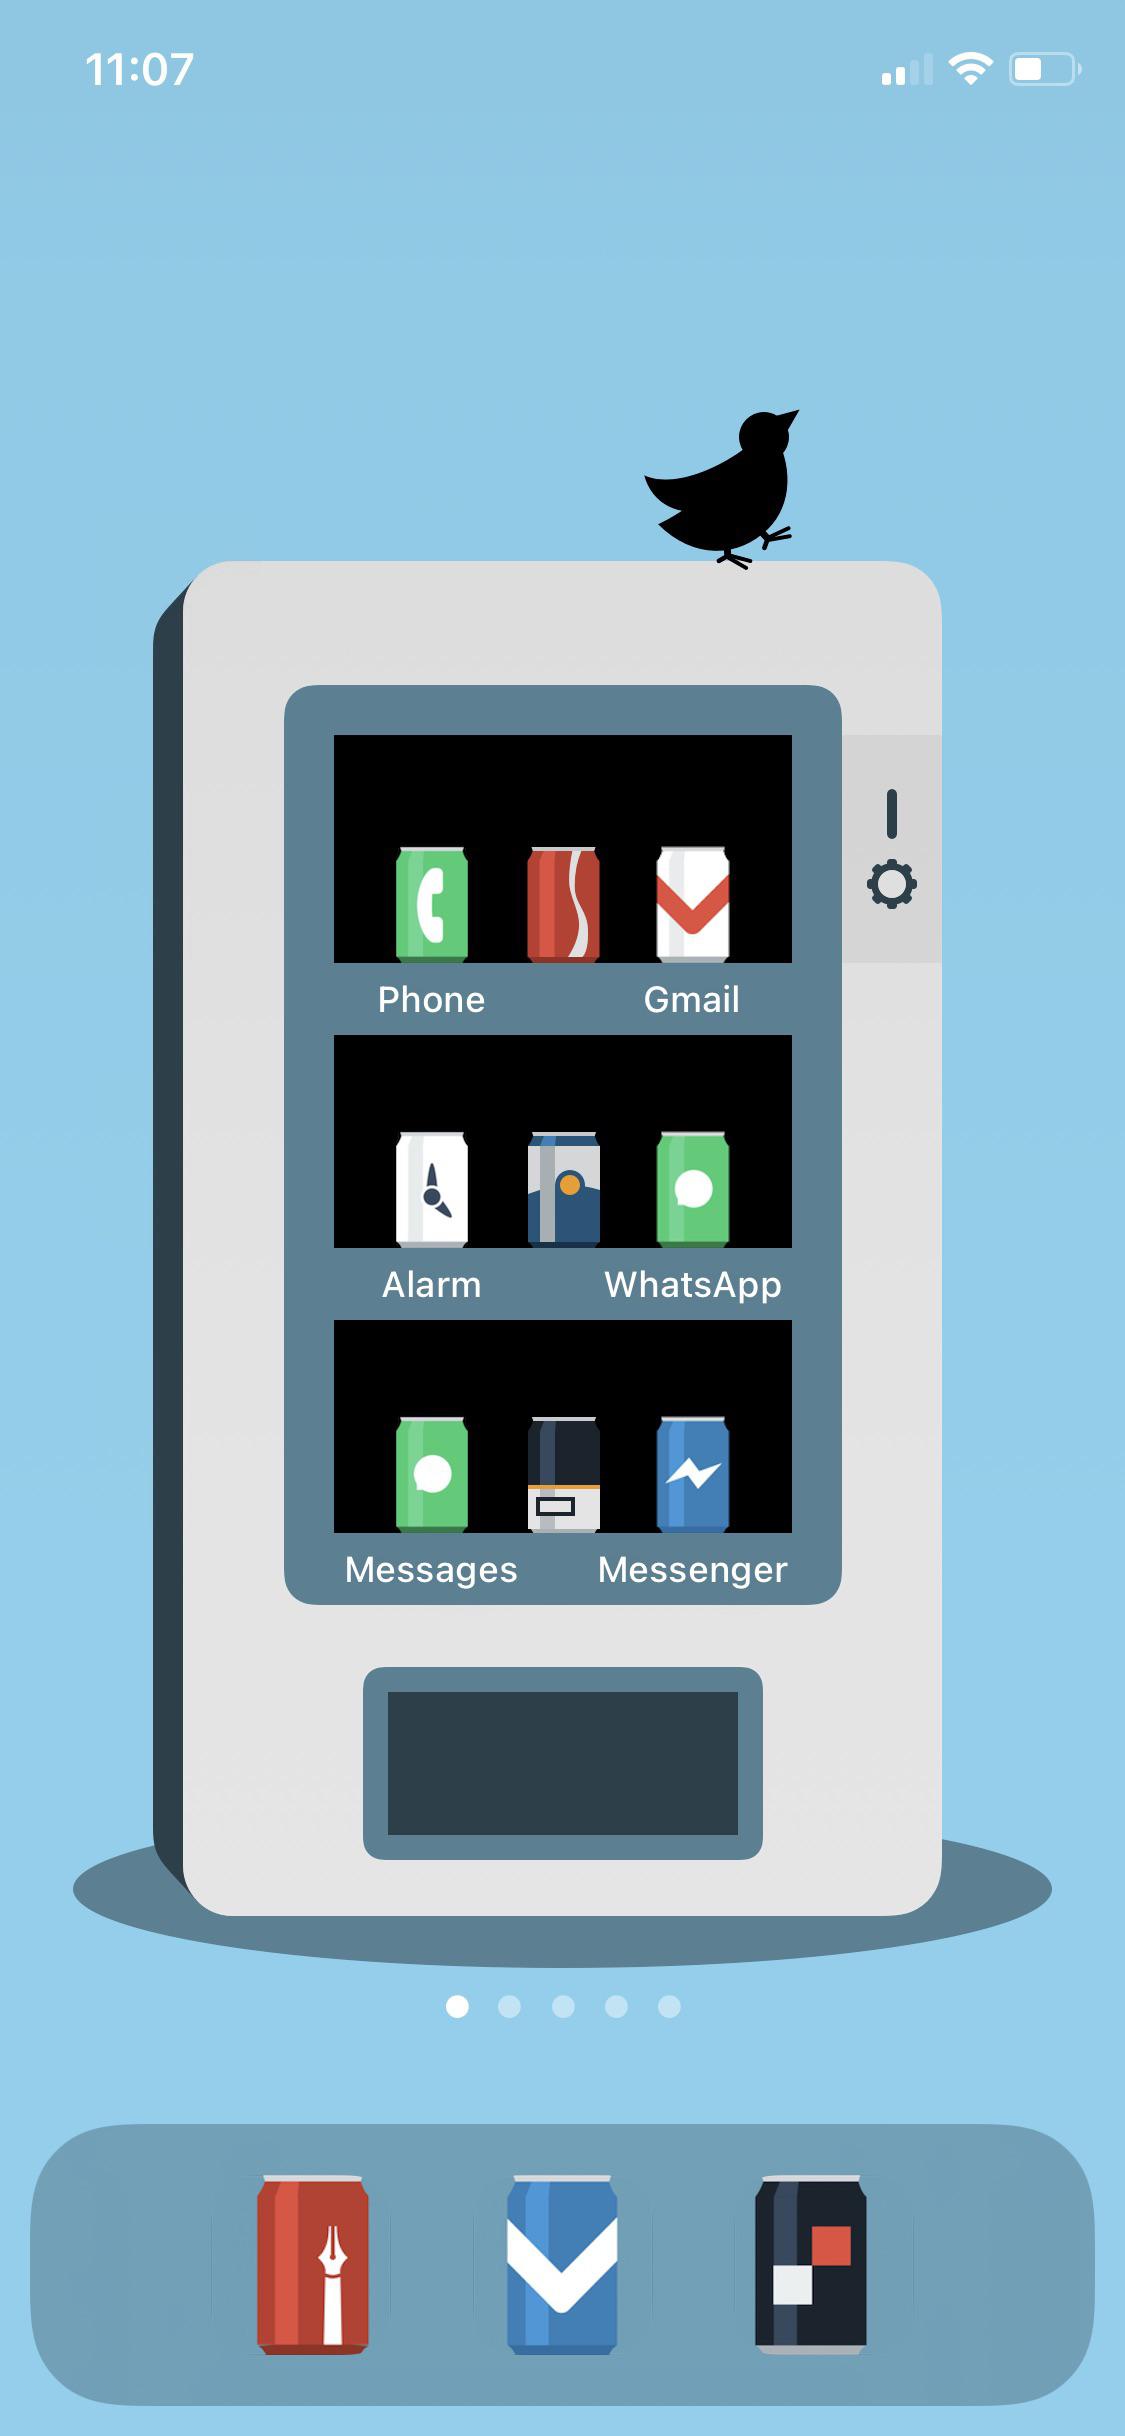 The Vending Machine iOSsetups